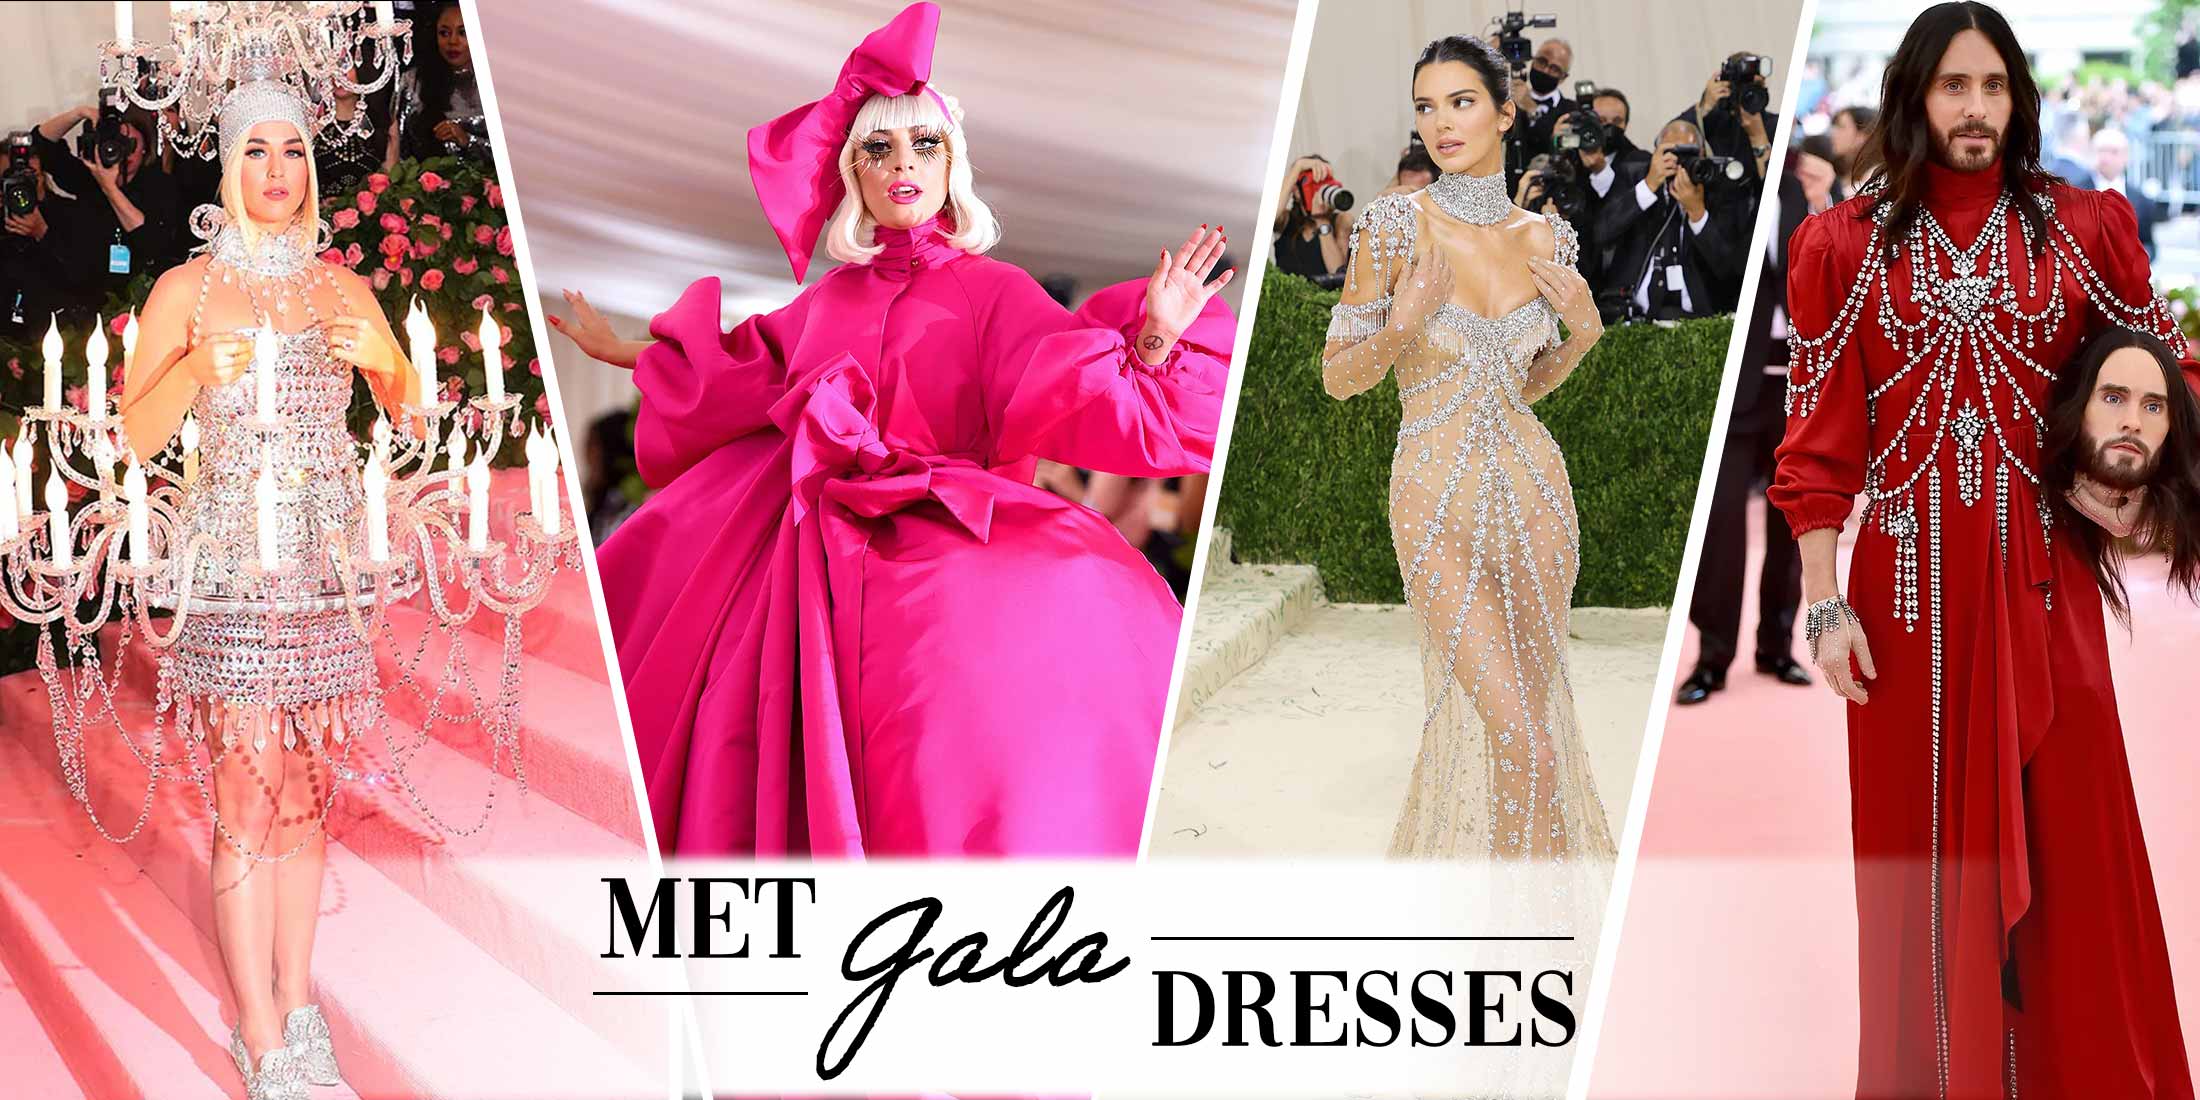 Meta Gala Dresses and Outfits